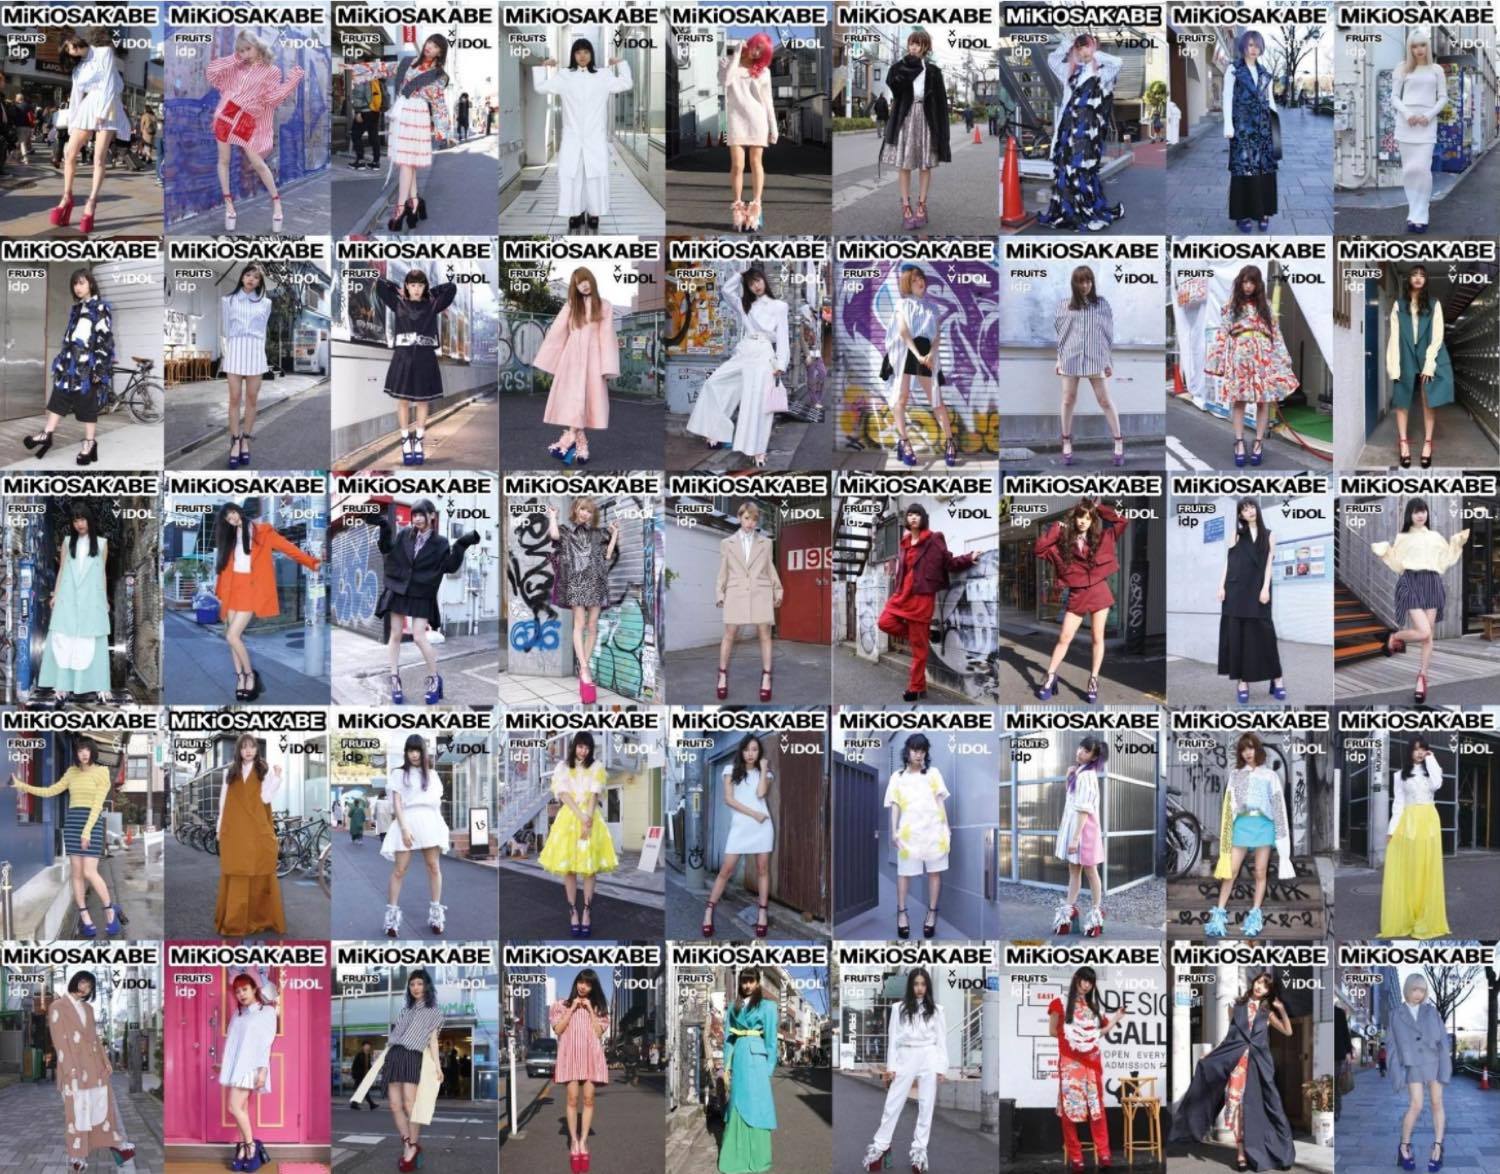 Article] High Fashion, Harajuku, and Idols in MiKiO SAKABE×∀iDOL 